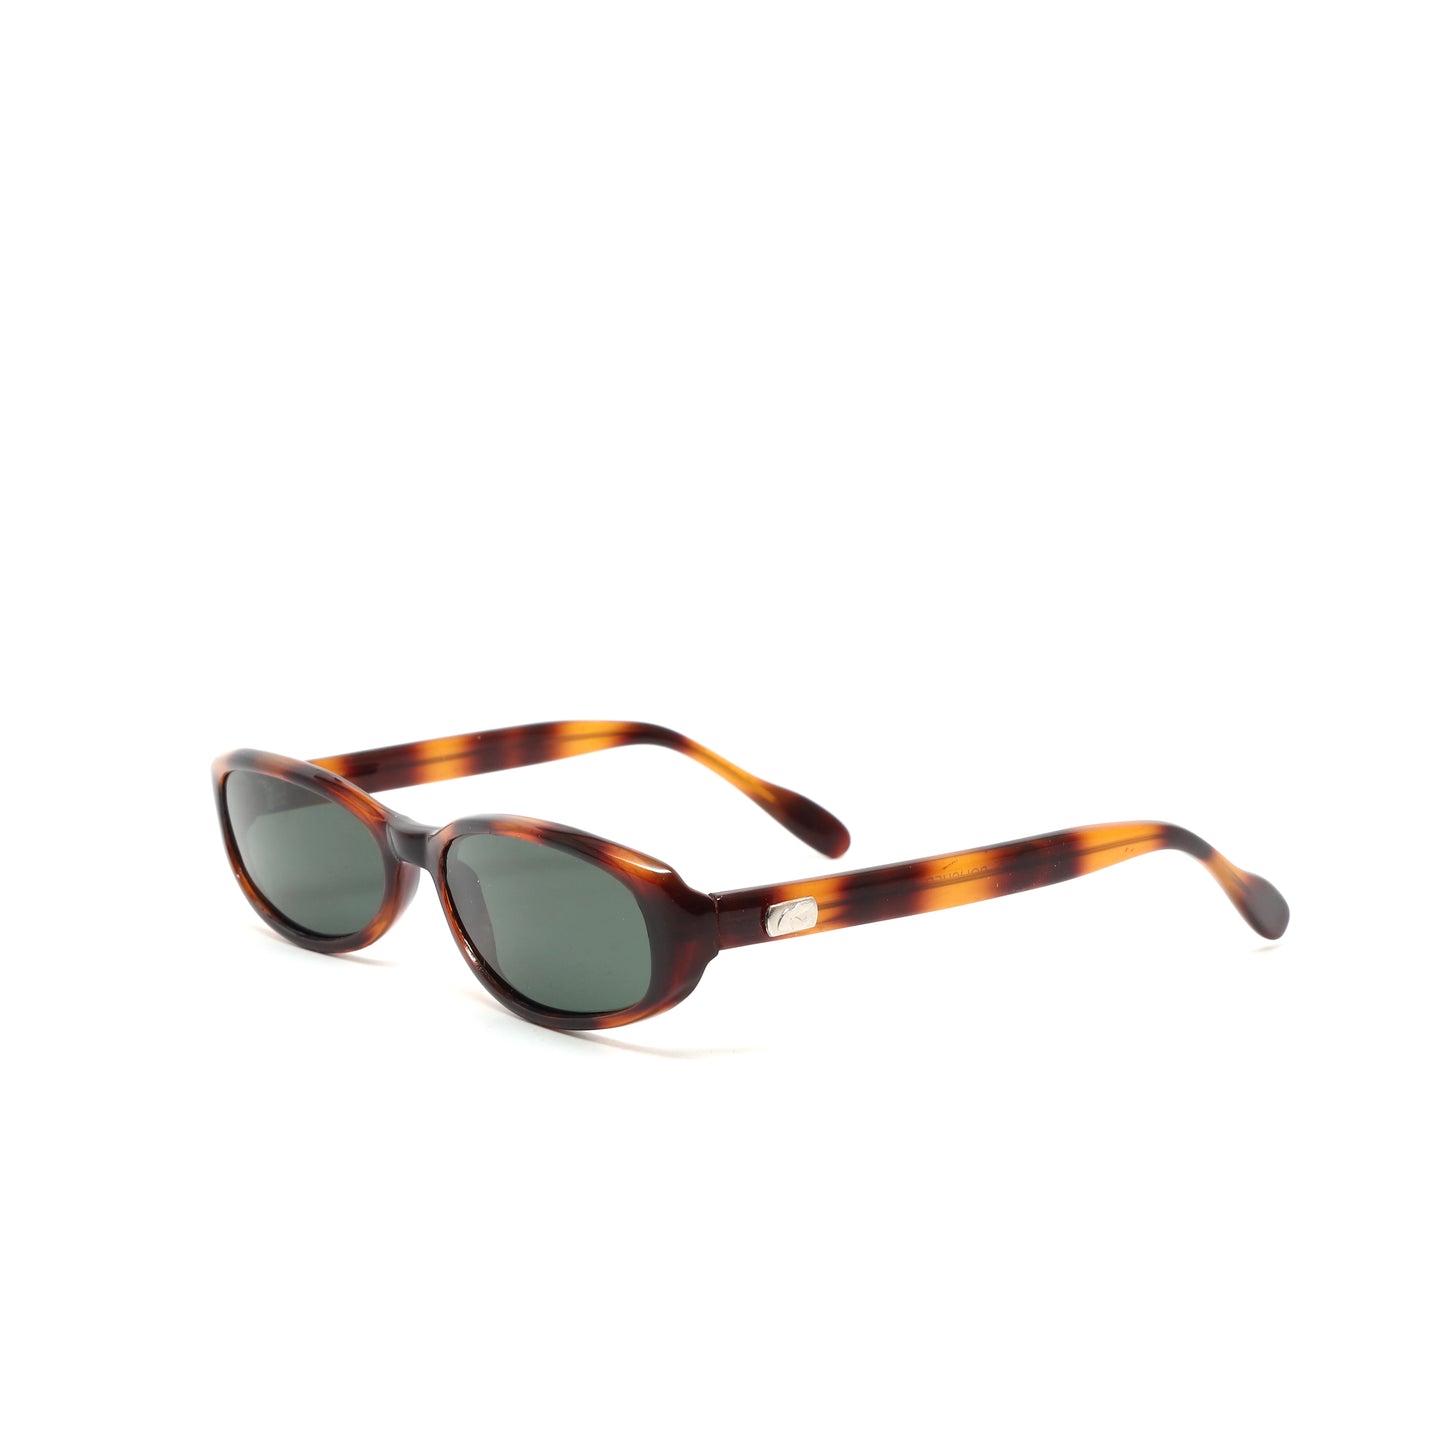 //Style 15// Vintage 90s Original Oval Sunglasses - Tortoise Brown